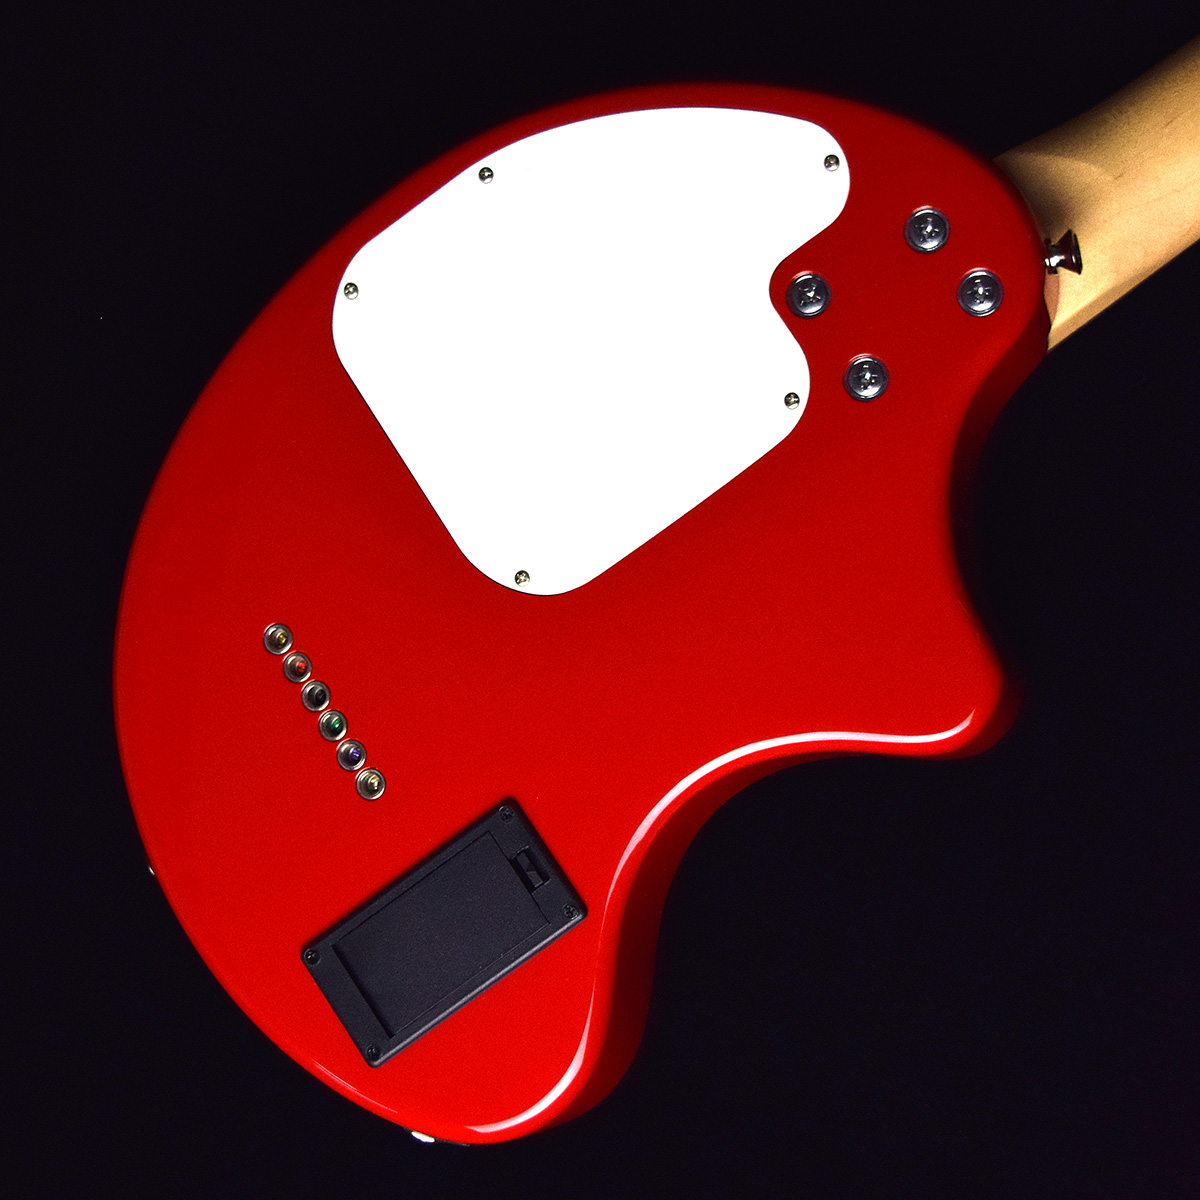 FERNANDES ZO-3 RED LH 左利きモデル スピーカー内蔵ミニエレキギター 